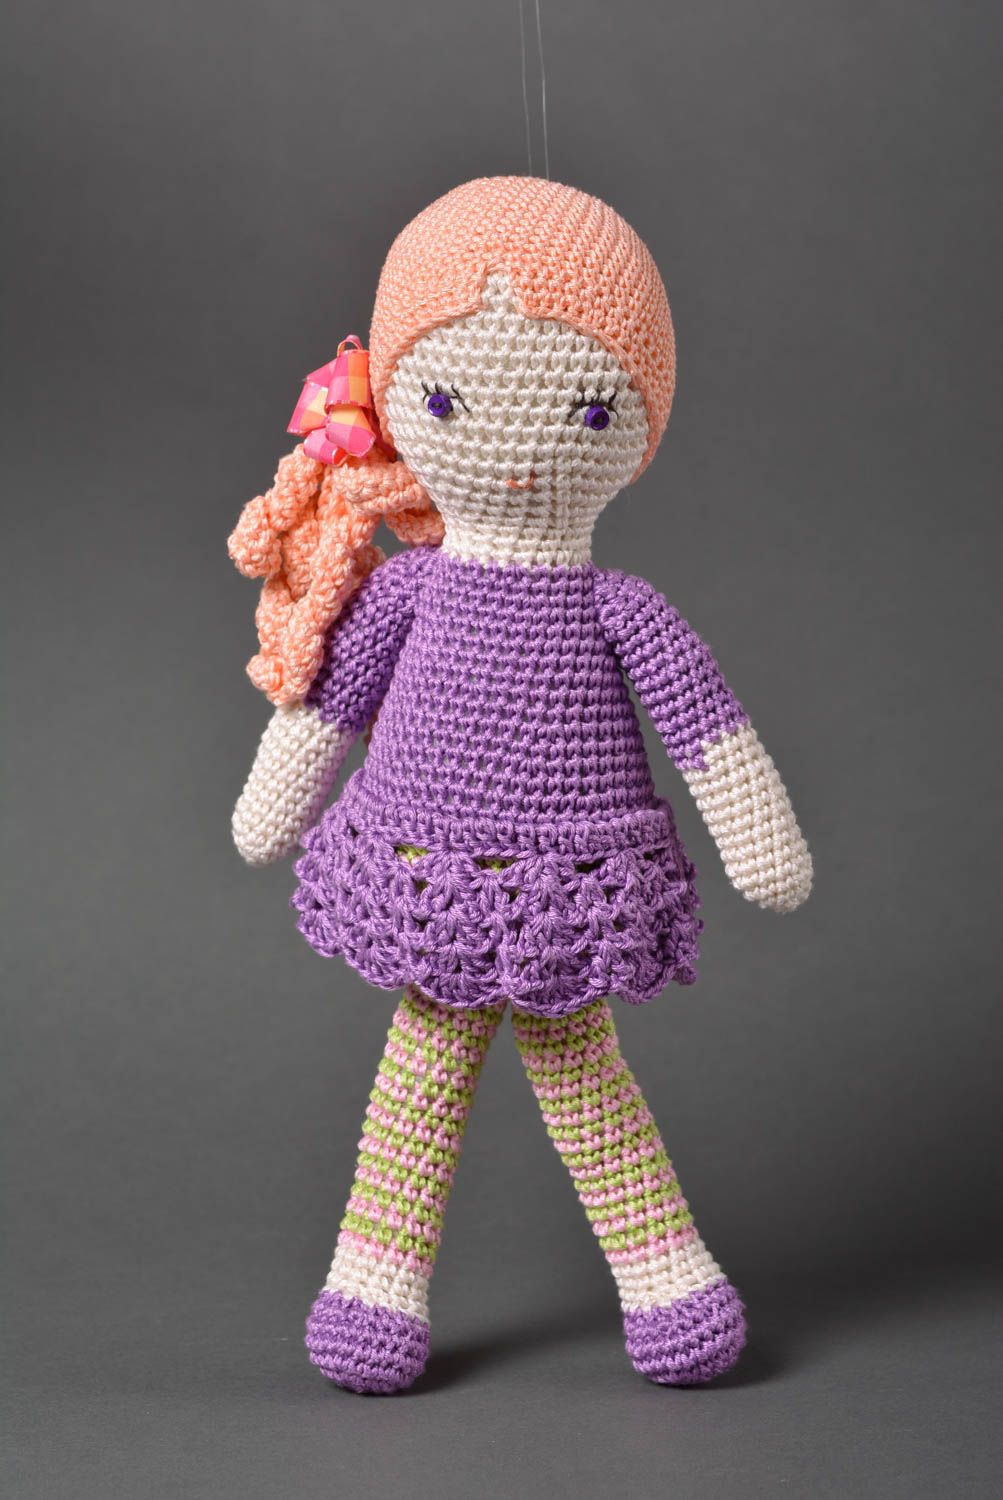 Handmade crochet toy stuffed toy soft toy for kids nursery design gift ideas photo 1